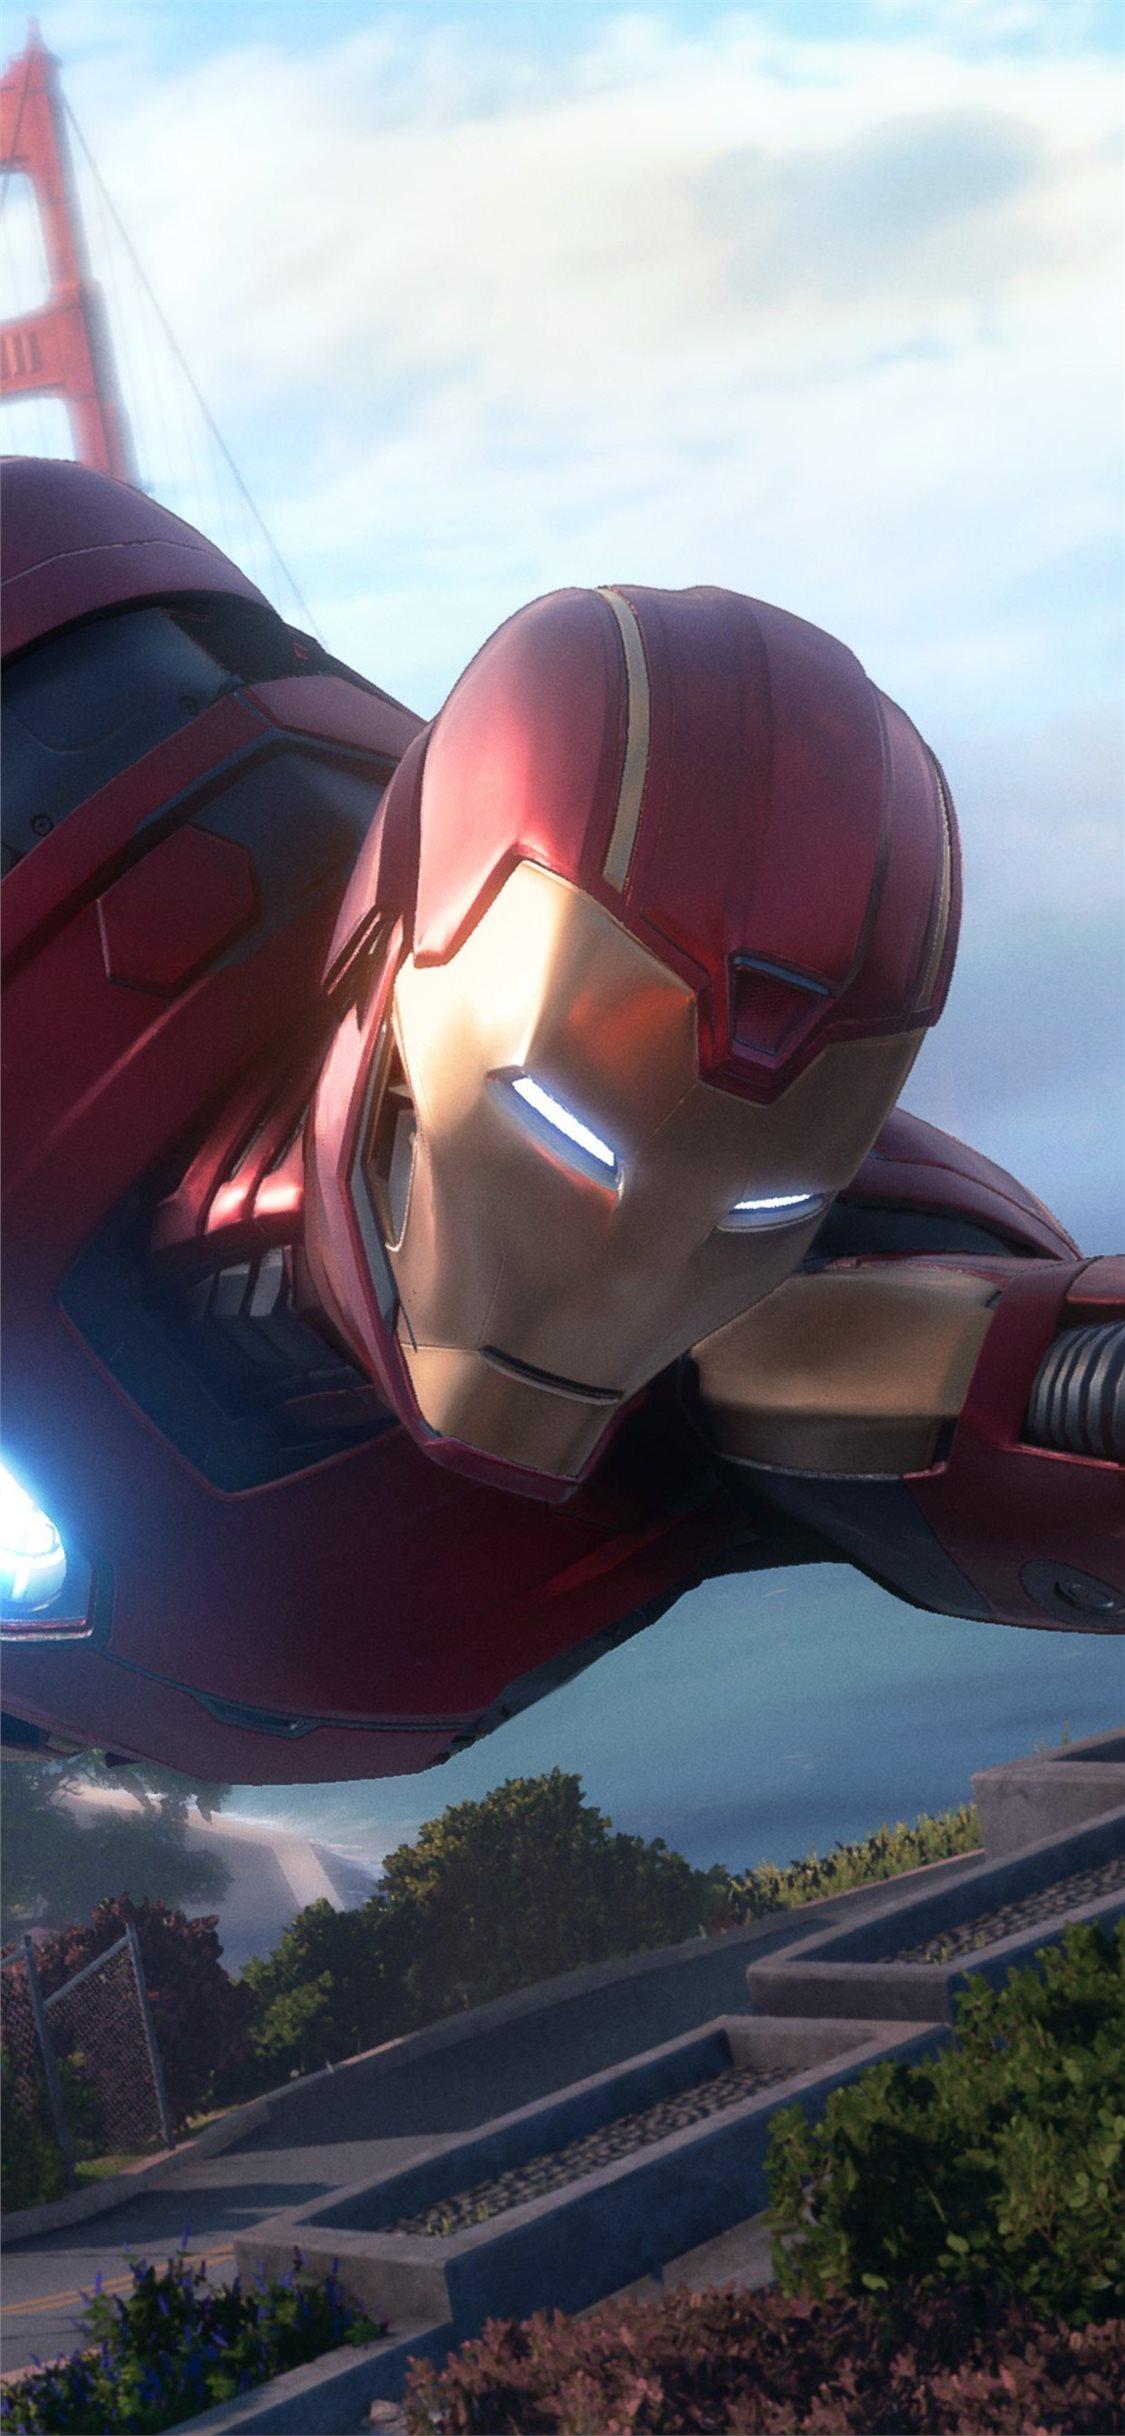 marvel avengers iron man iPhone X Wallpaper Free Download